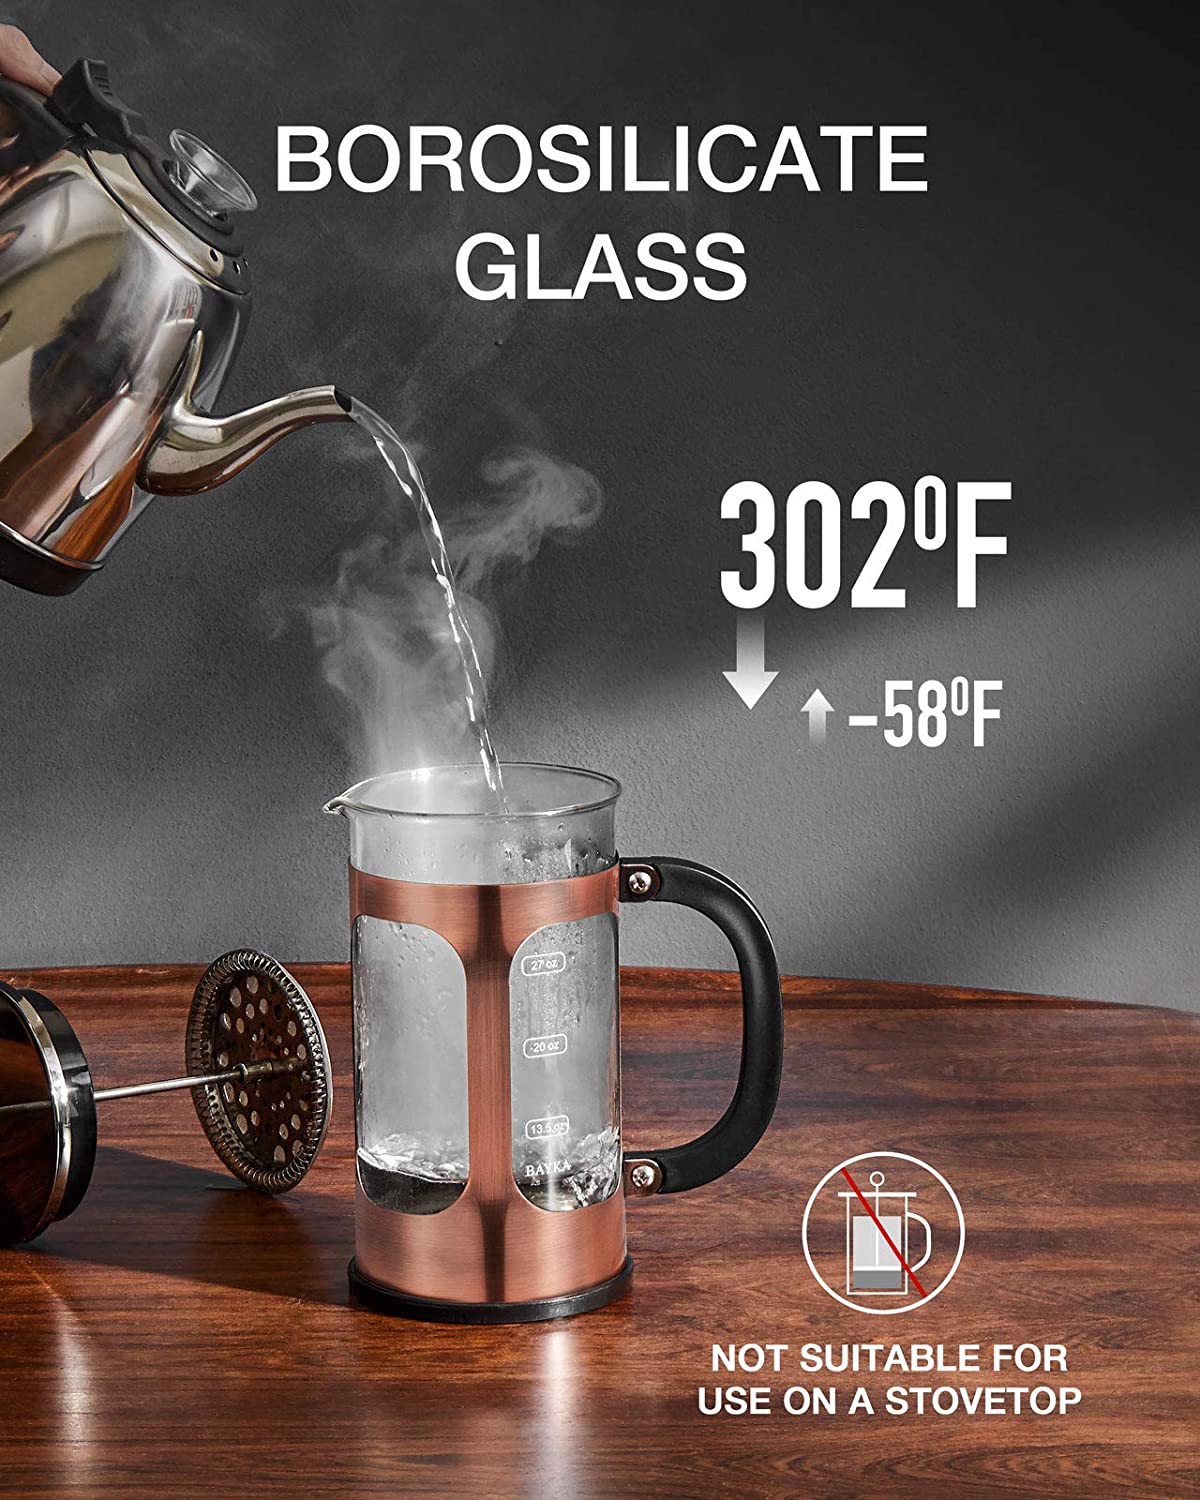 Bodum Brazil French Press Coffee Maker with Borosilicate Glass Carafe, 51  Ounce, Black 